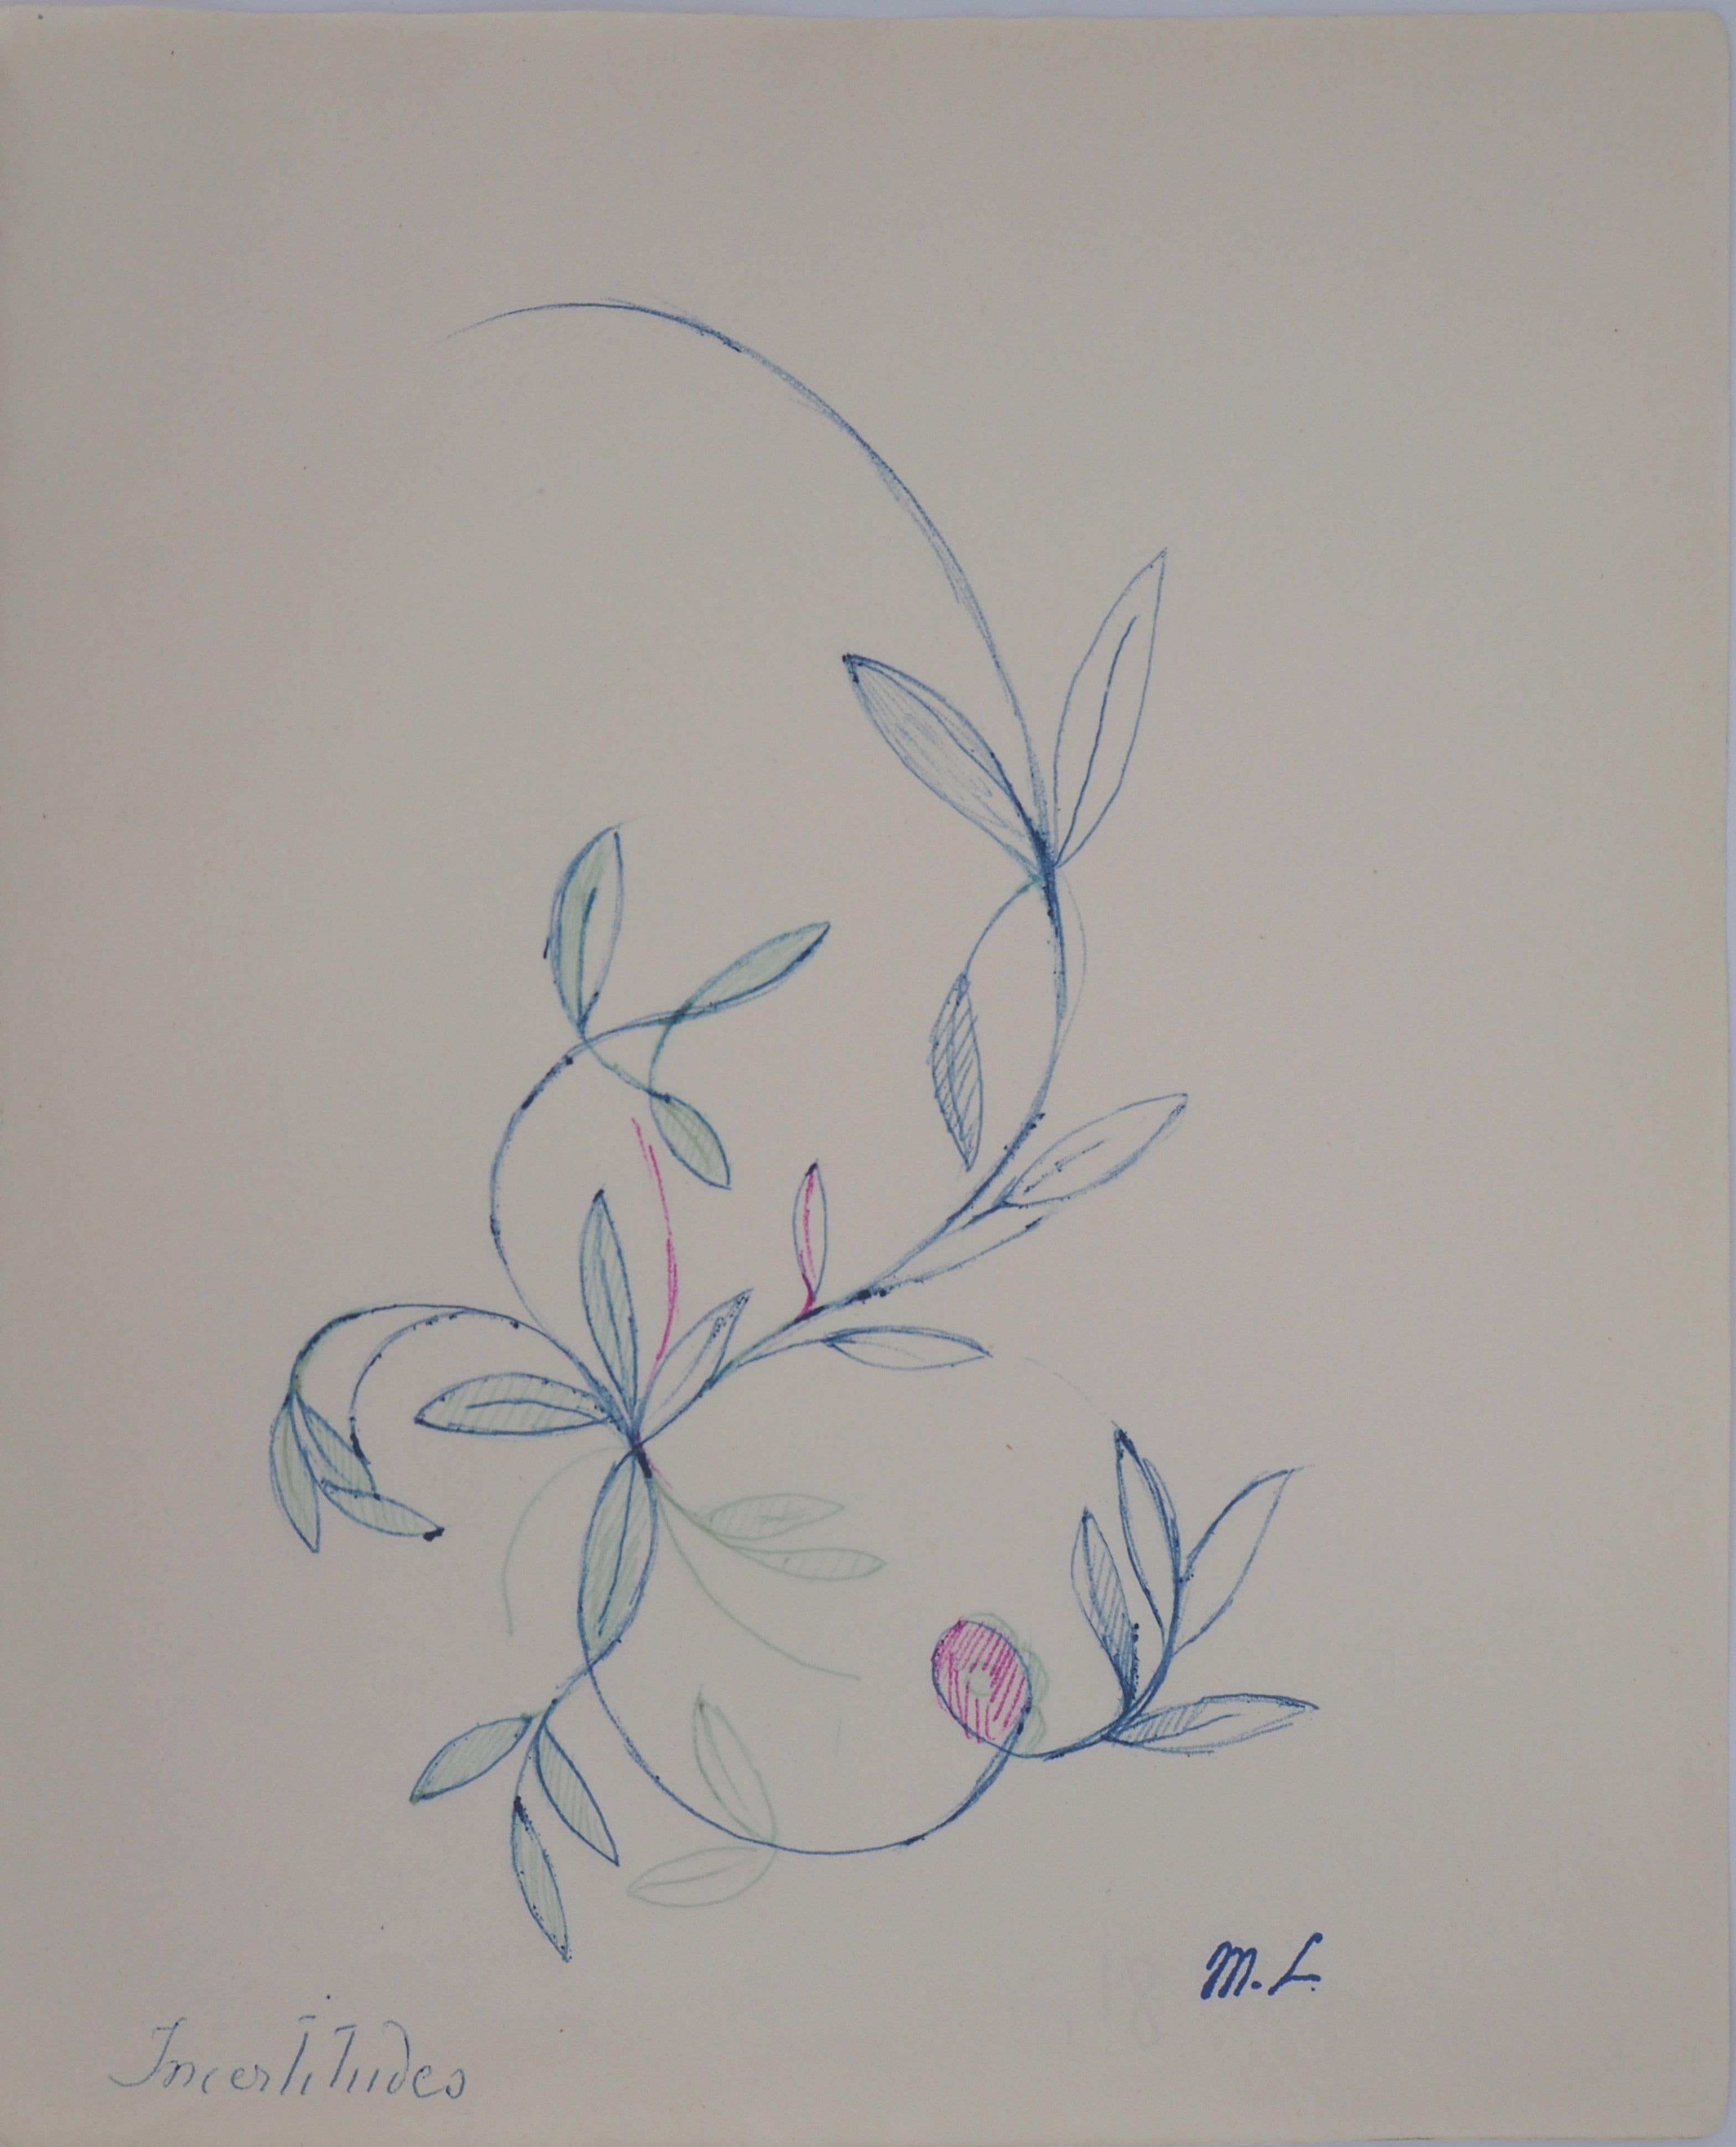  Floral Ornament - Original ink drawing, 1953